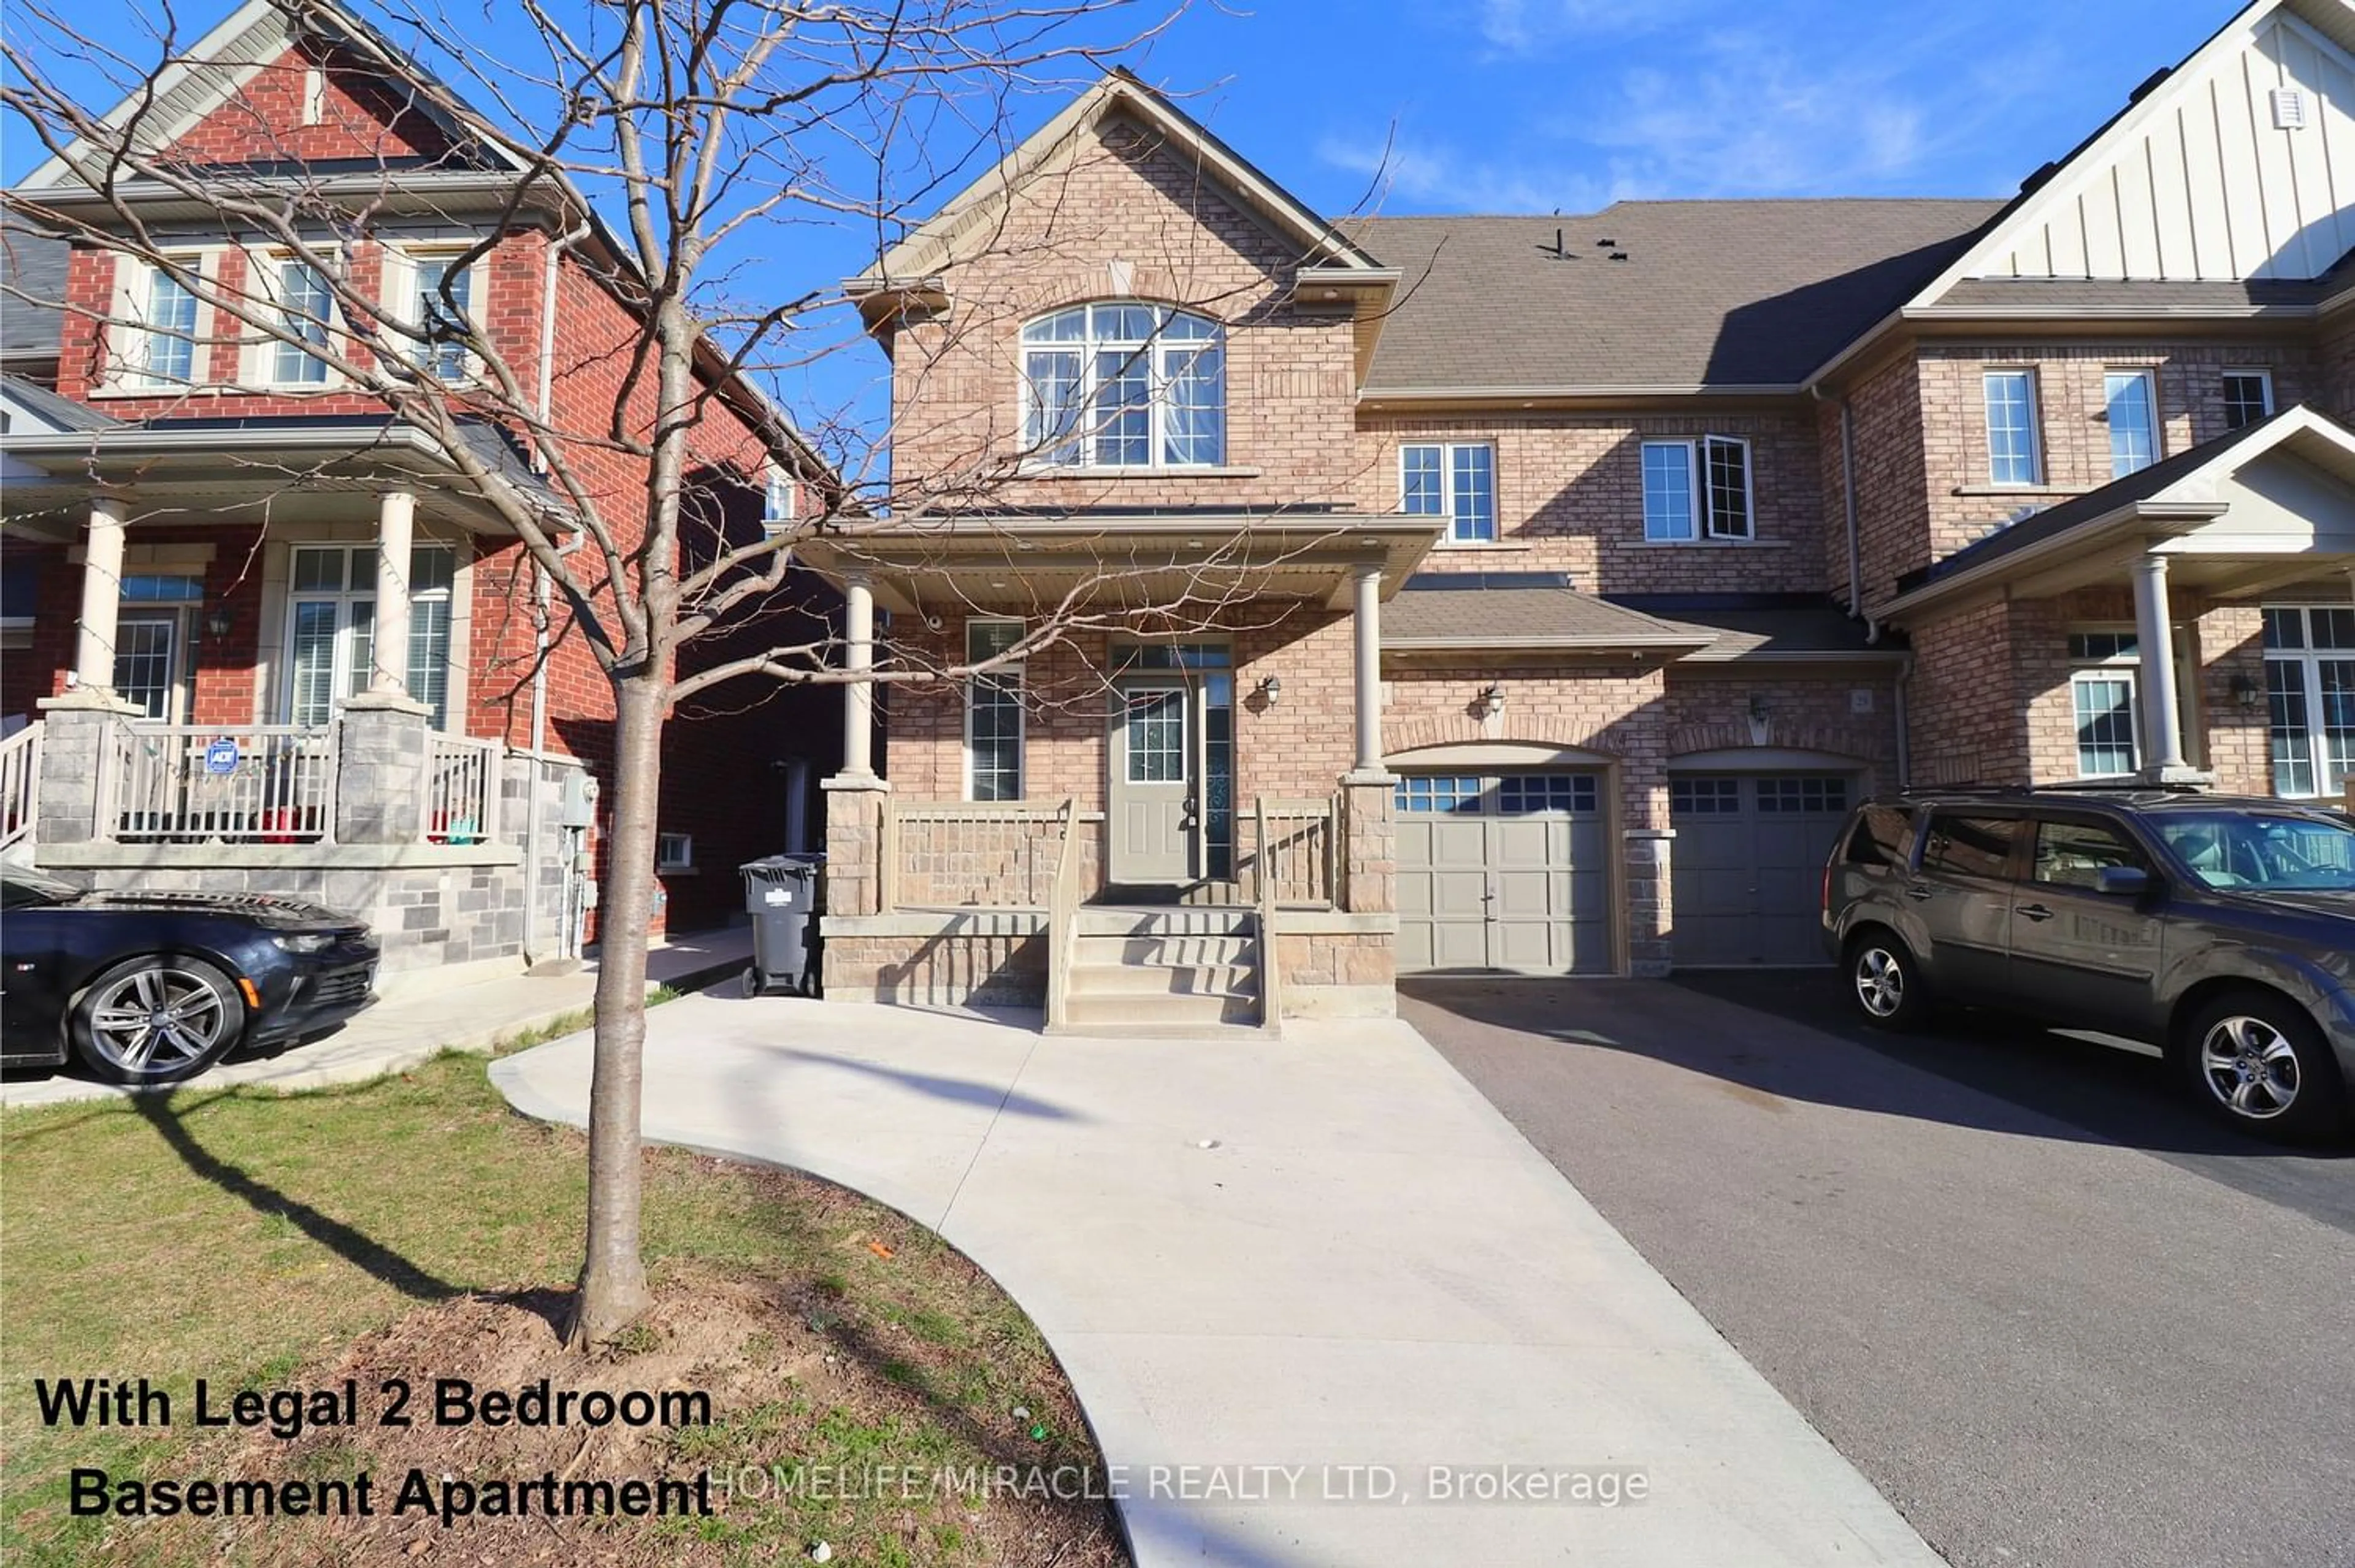 Home with brick exterior material for 31 Saint Dennis Rd, Brampton Ontario L6R 0B3